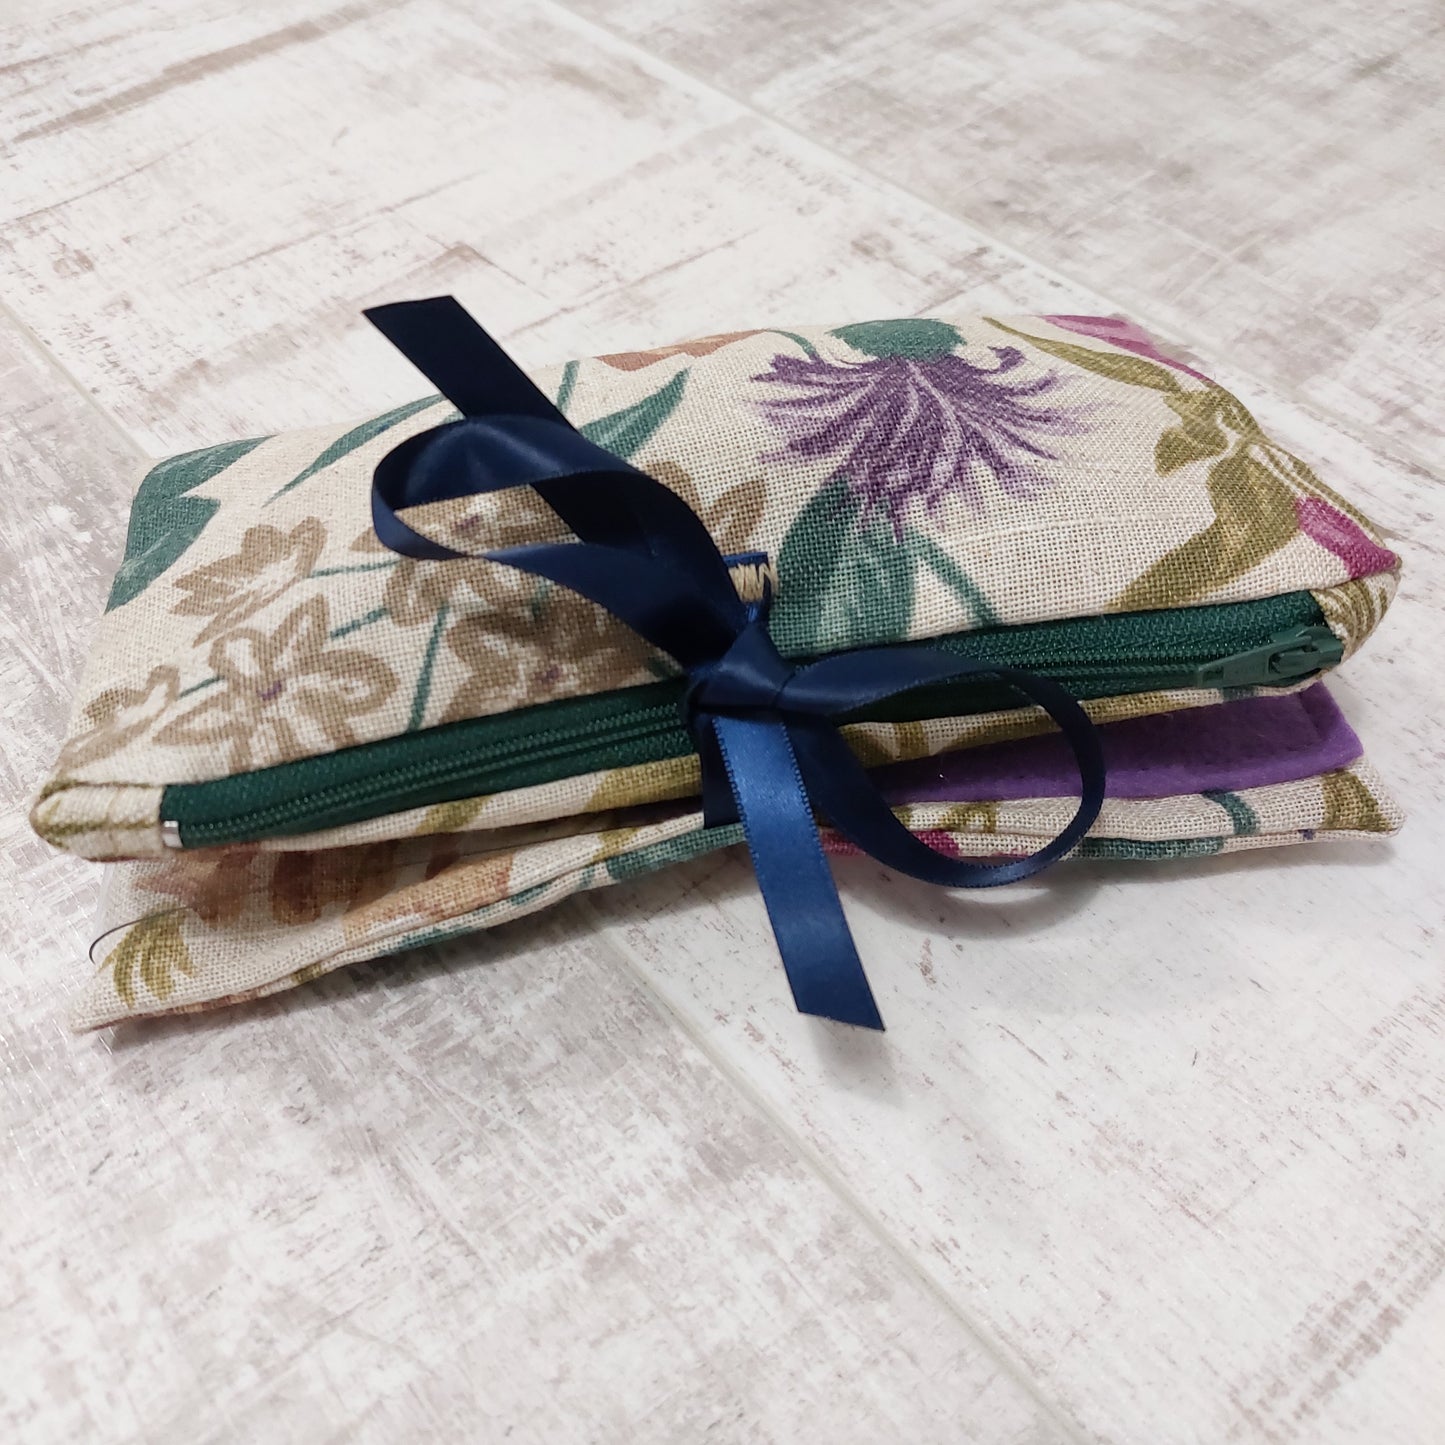 Floral make up bag, closed with navy ribbon ties